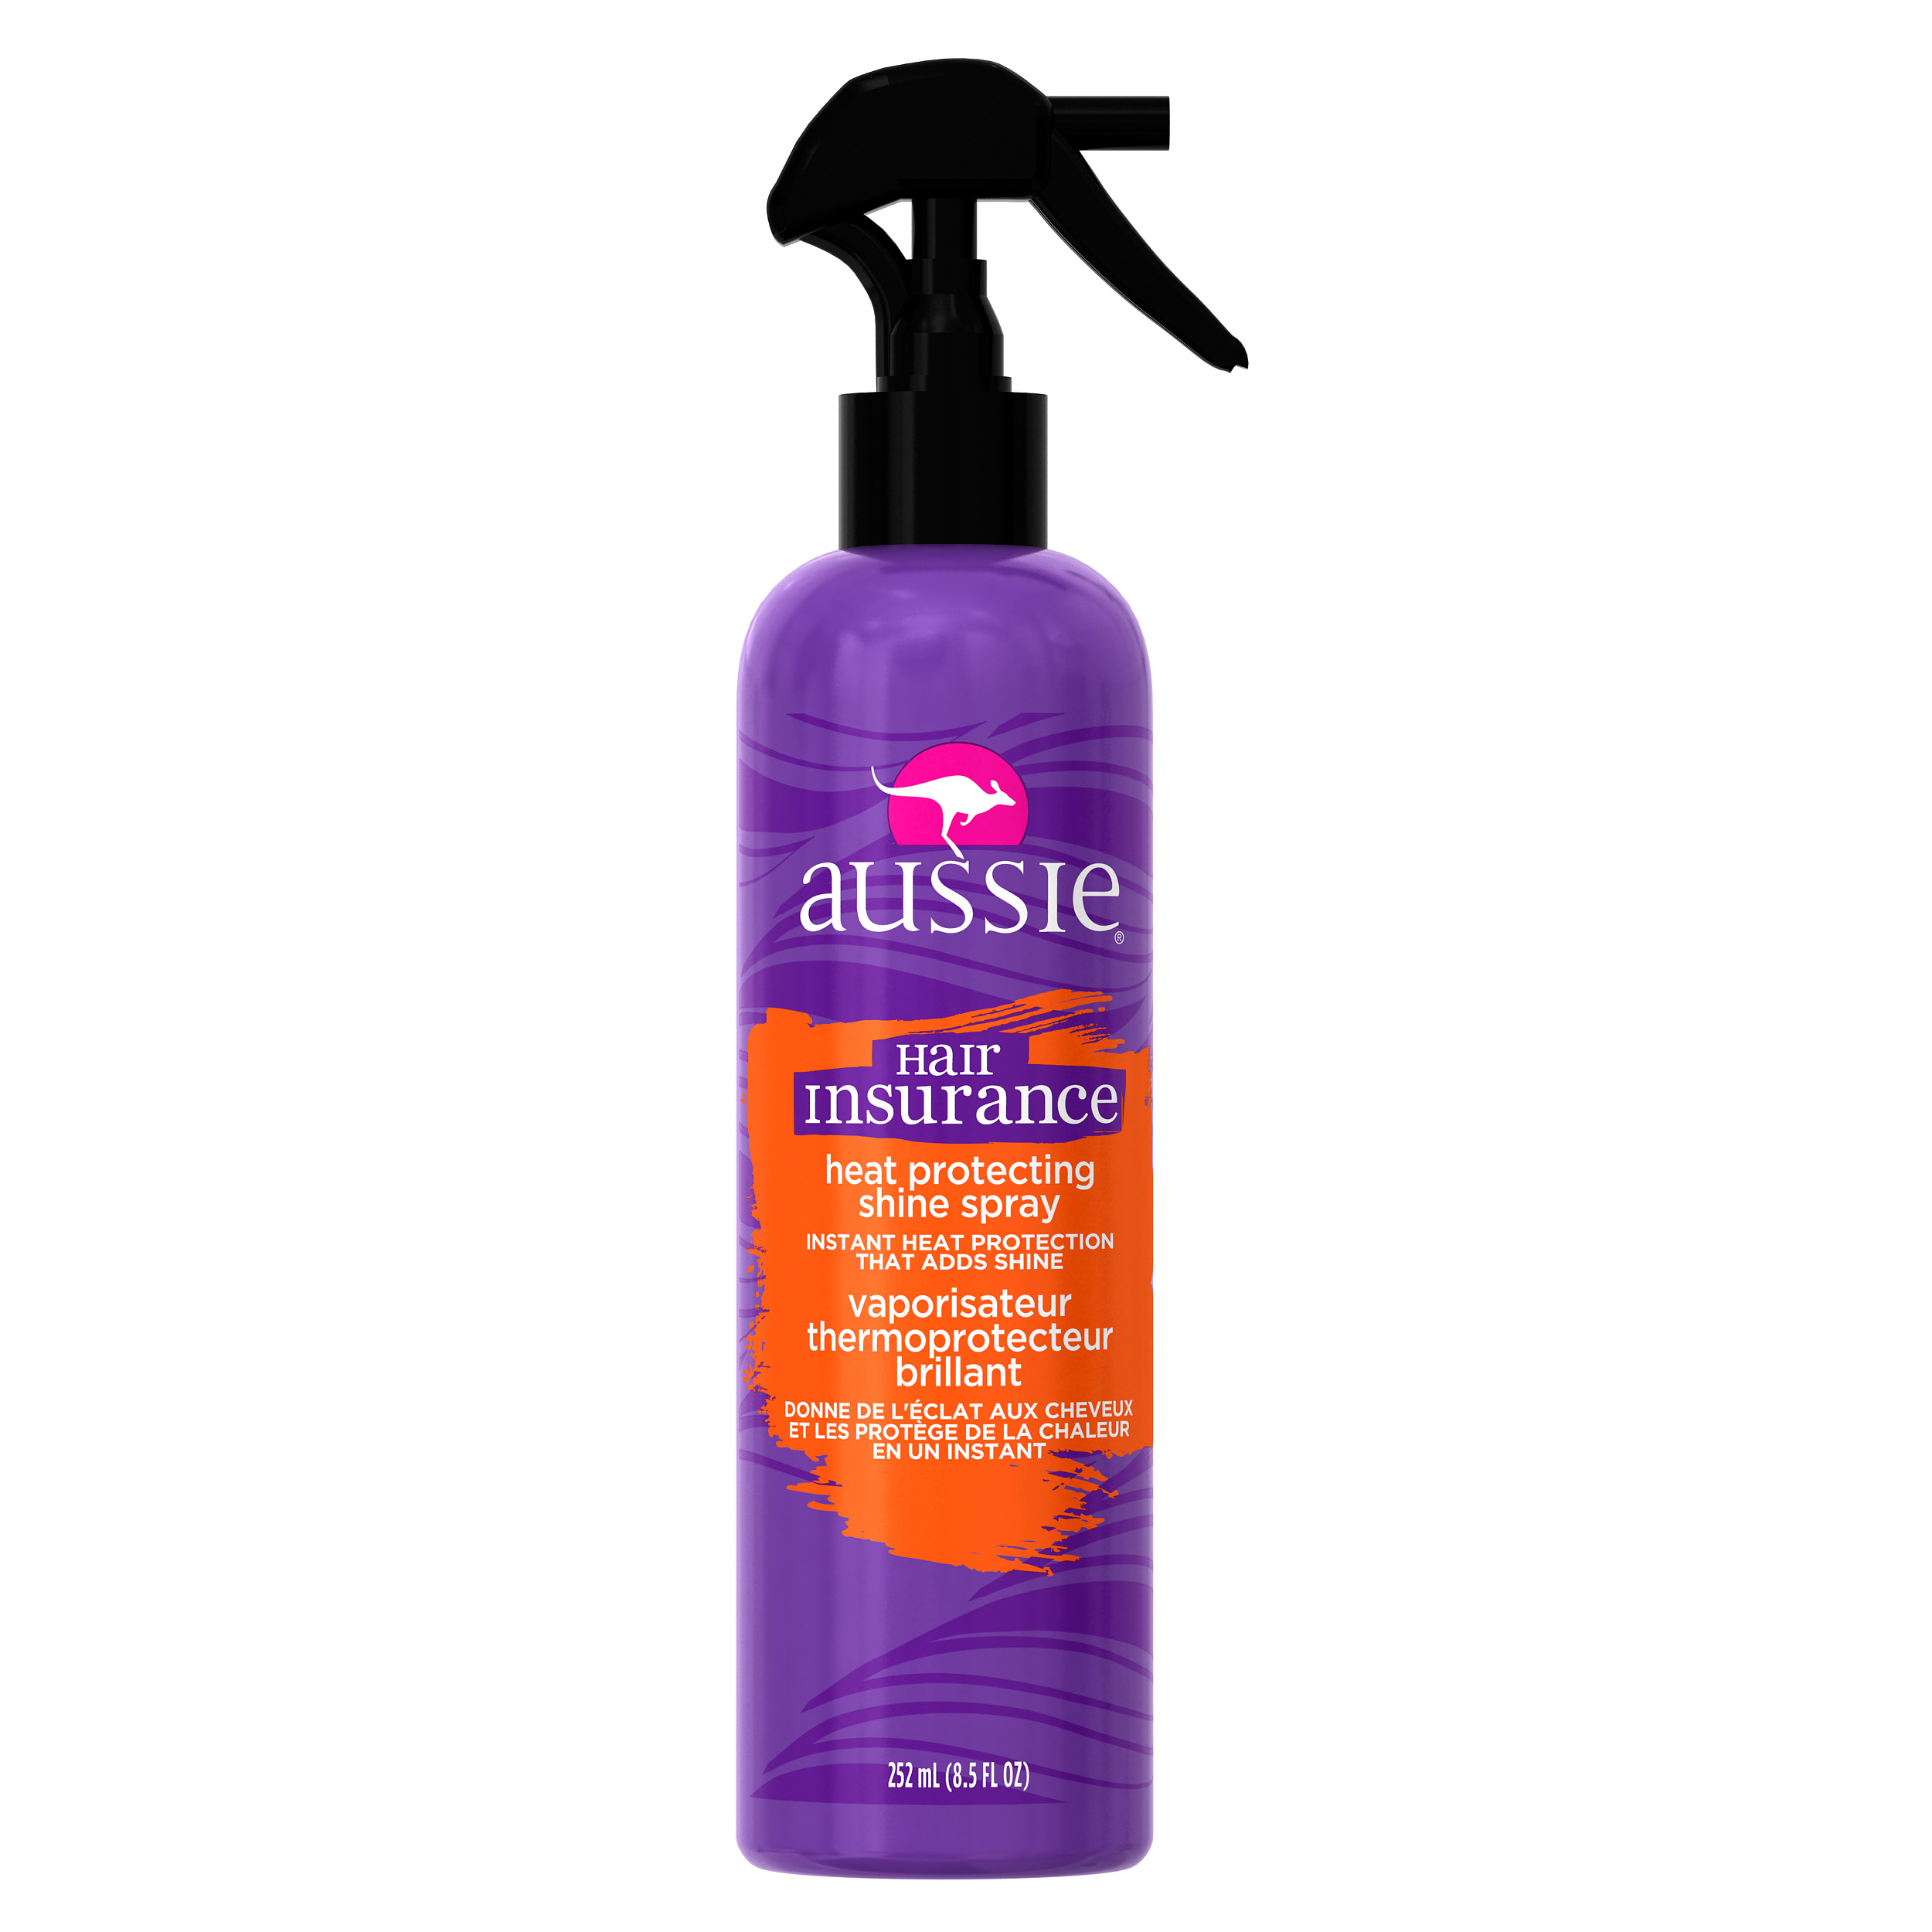 Aussie Hair Insurance Heat Protecting Hair Shine Spray 8.5 Fl Oz - image 5 of 6